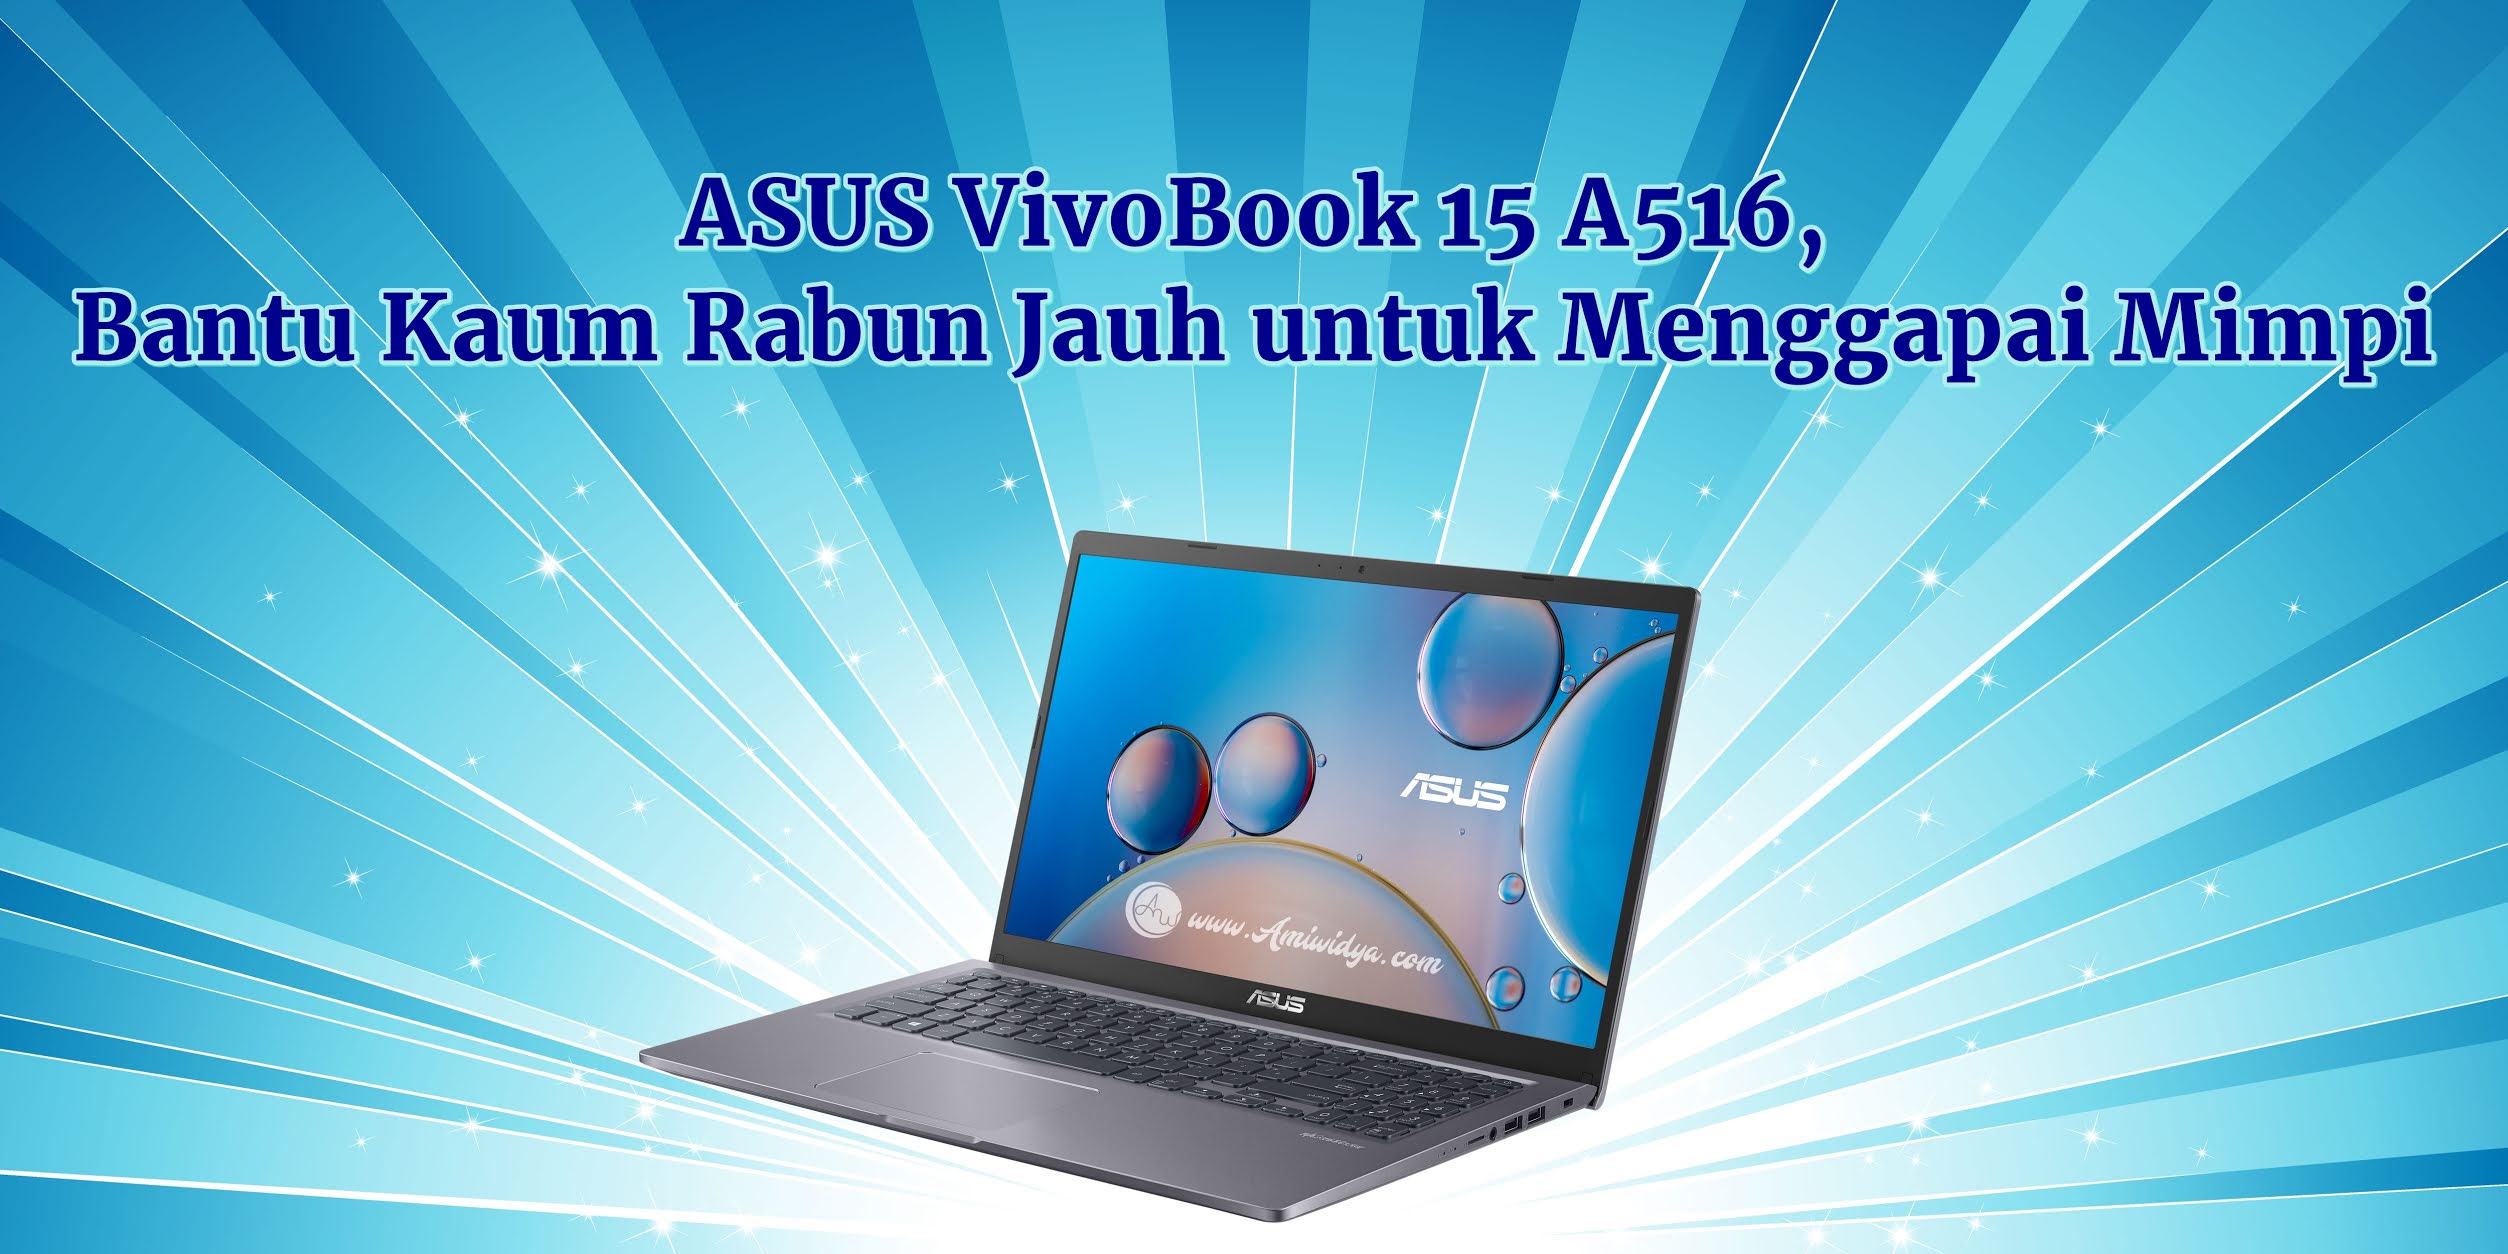 Asus vivobook a516